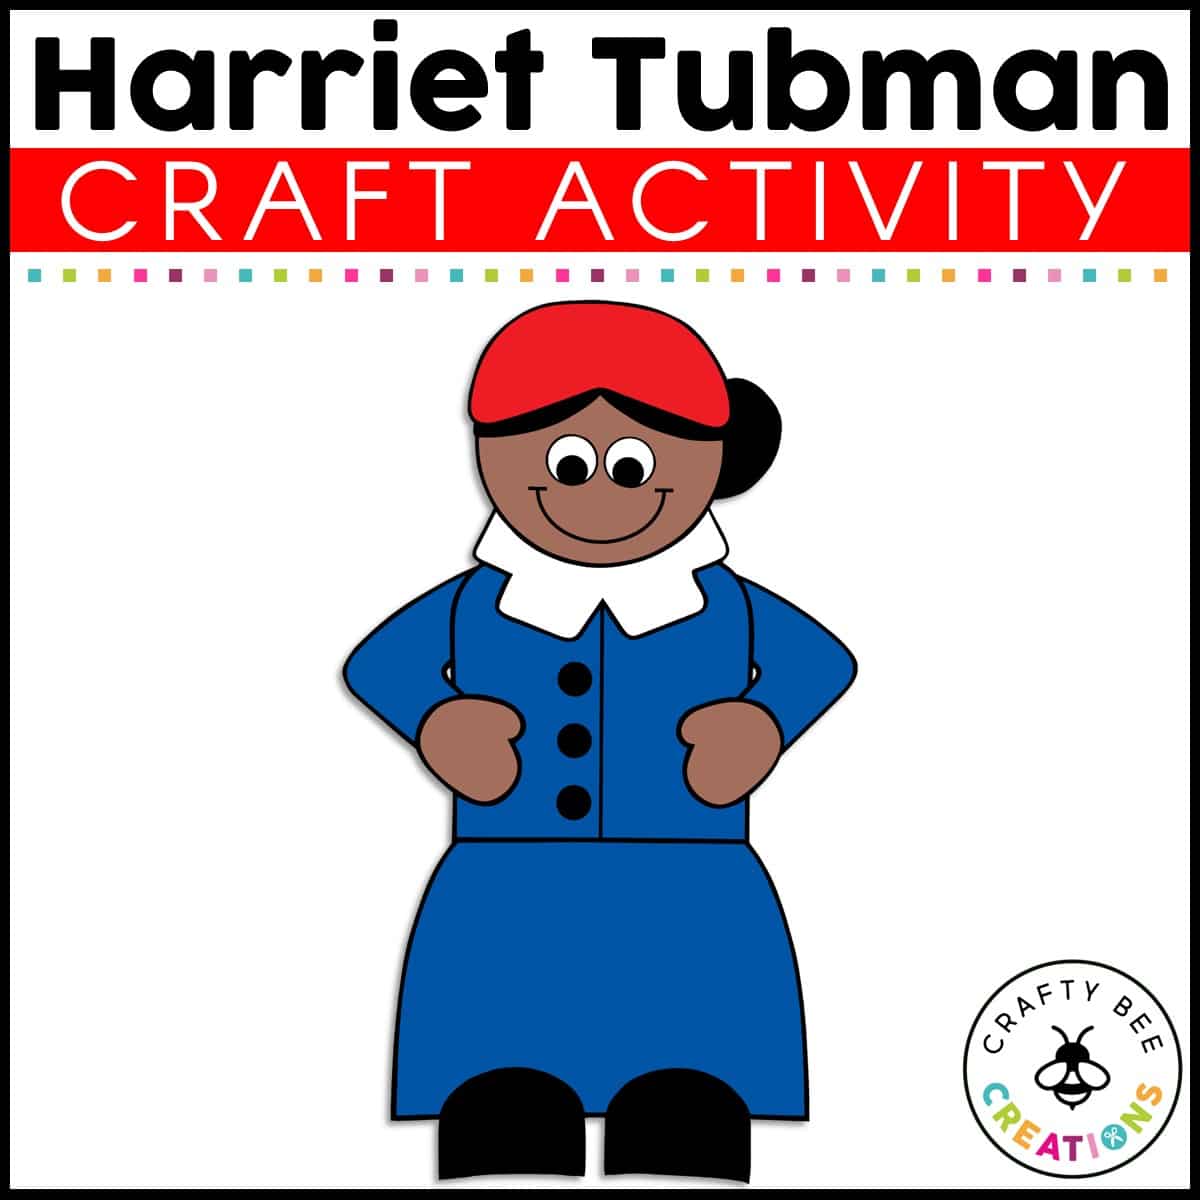 Harriet Tubman Craft Activity - Crafty Bee Creations